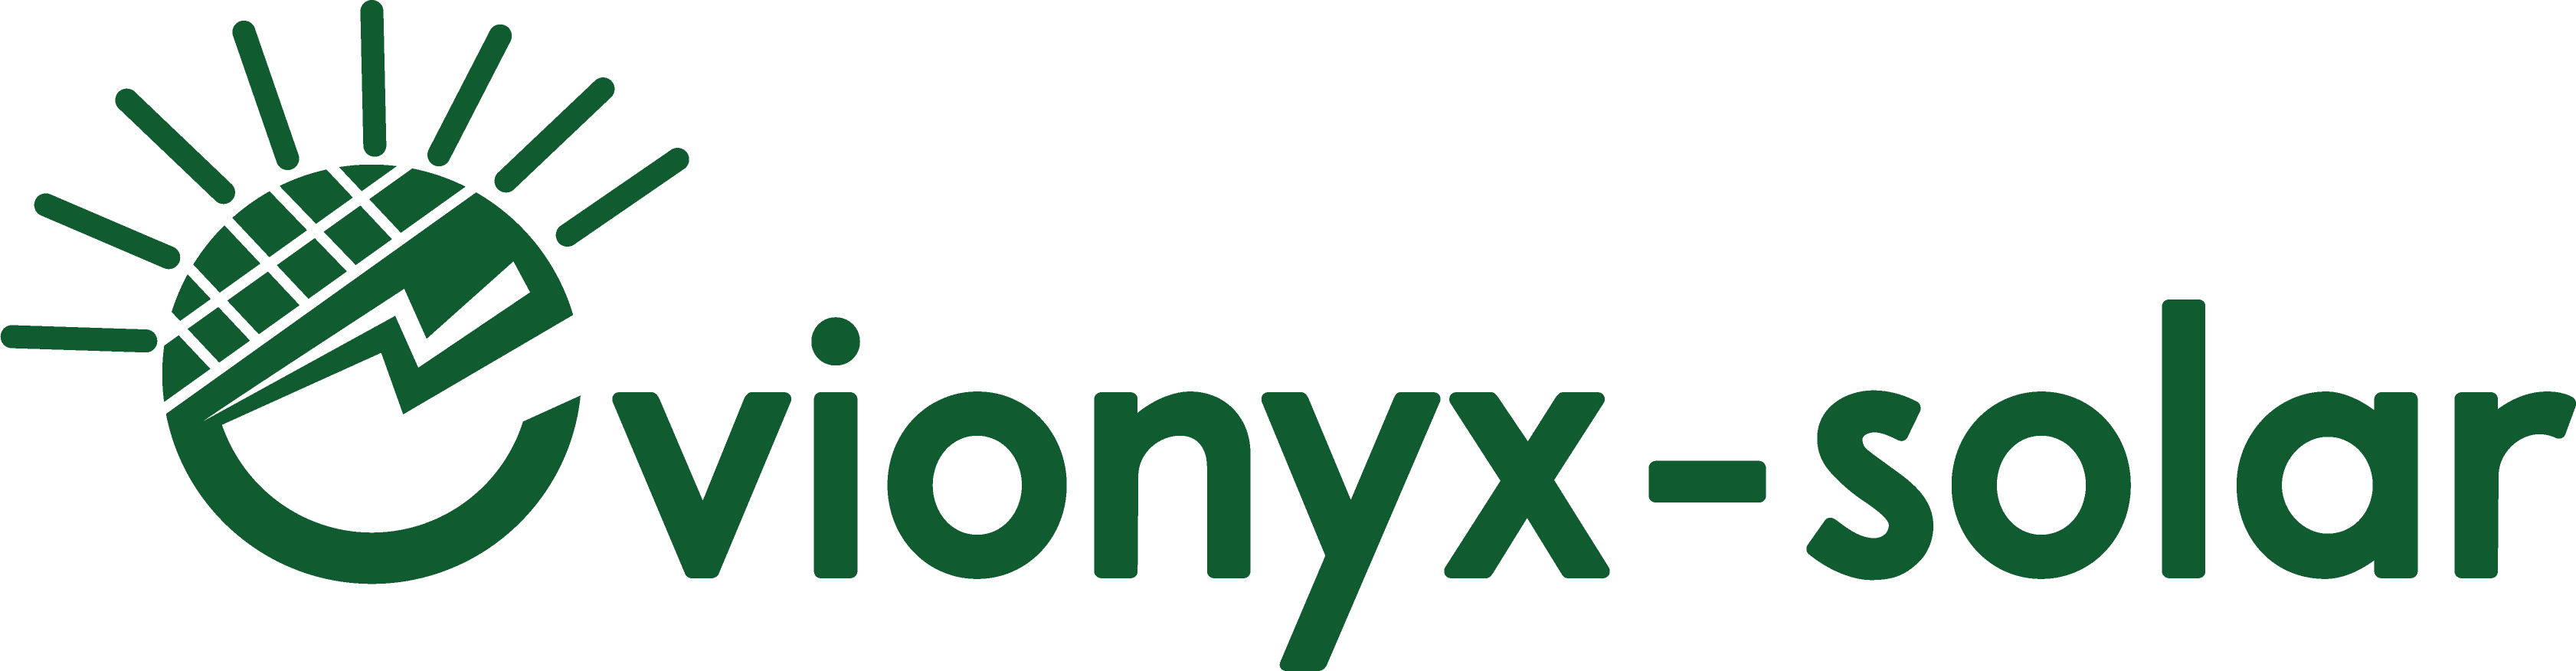 Evionyx Solar - Ihr Partner in Leipzig!